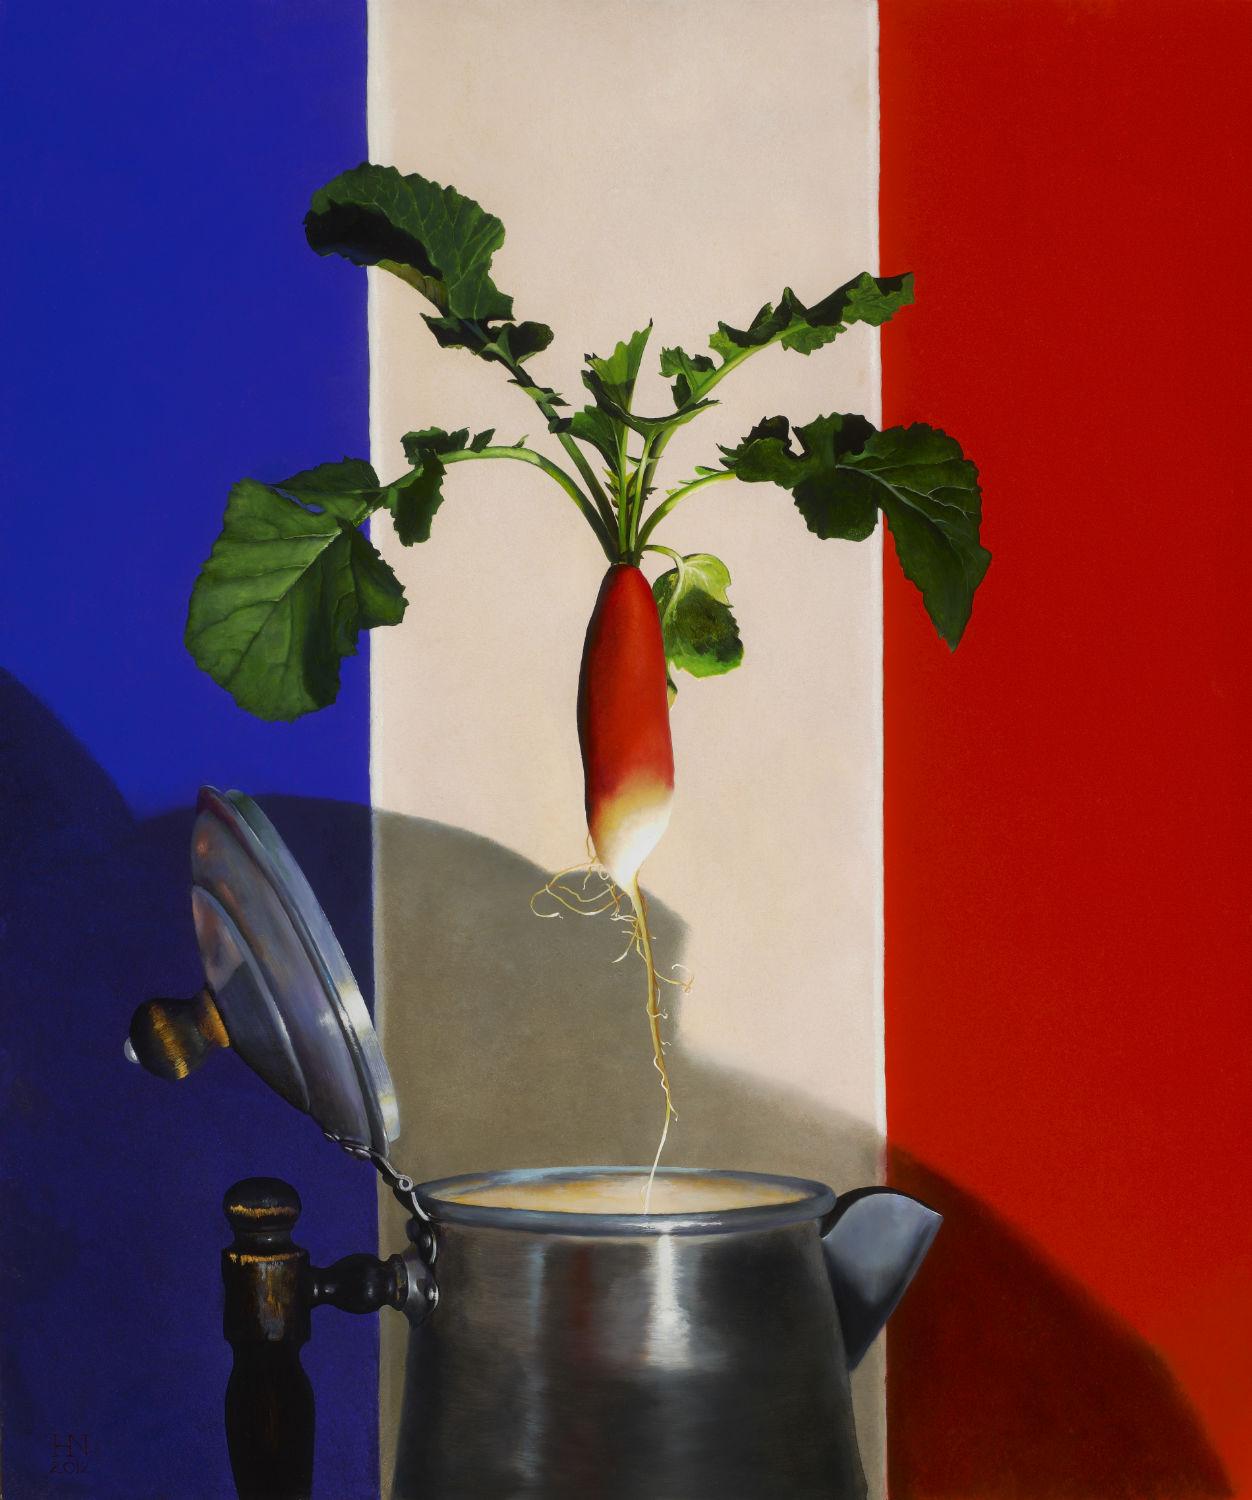 "French Breakfast Radish", Oil Painting